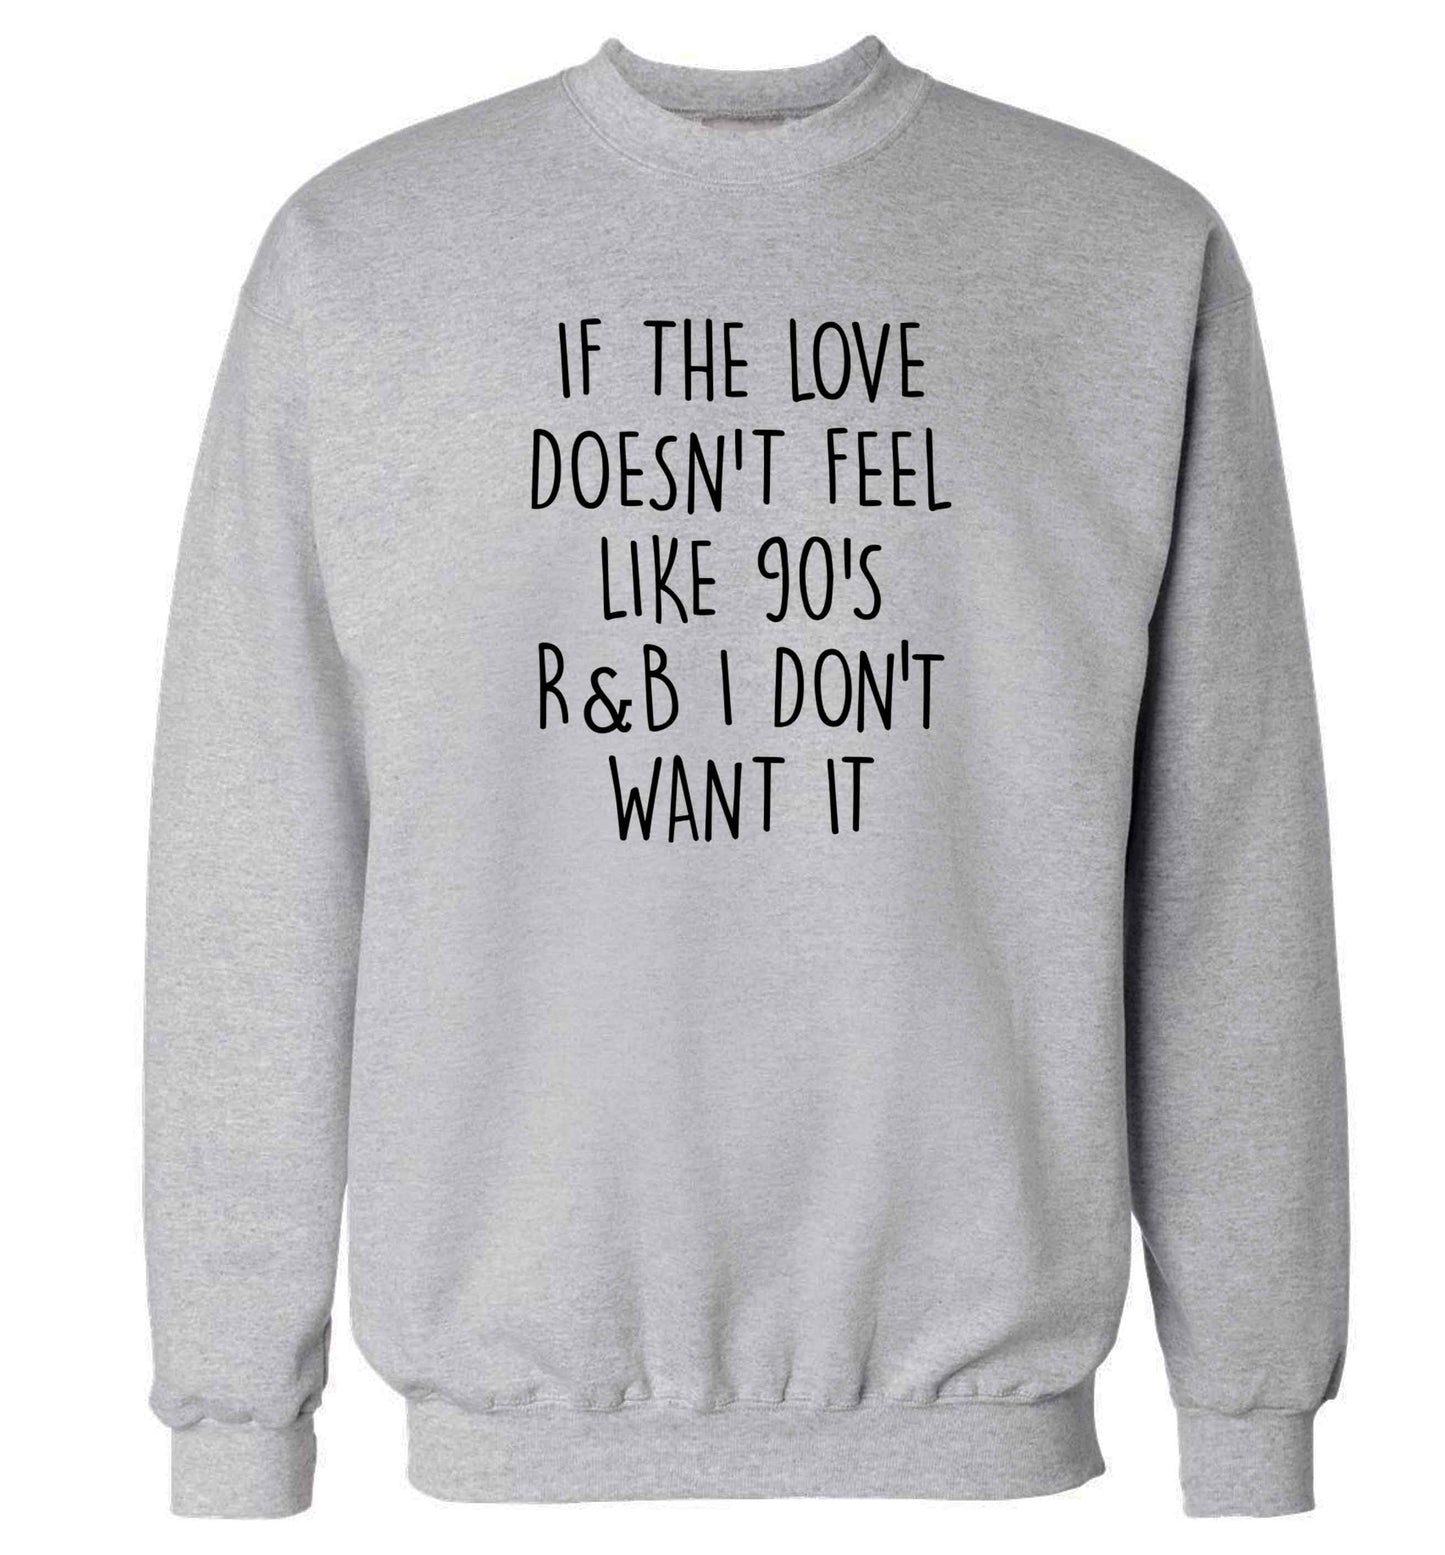 If the love doesn't feel like 90's r&b I don't want it adult's unisex grey sweater 2XL